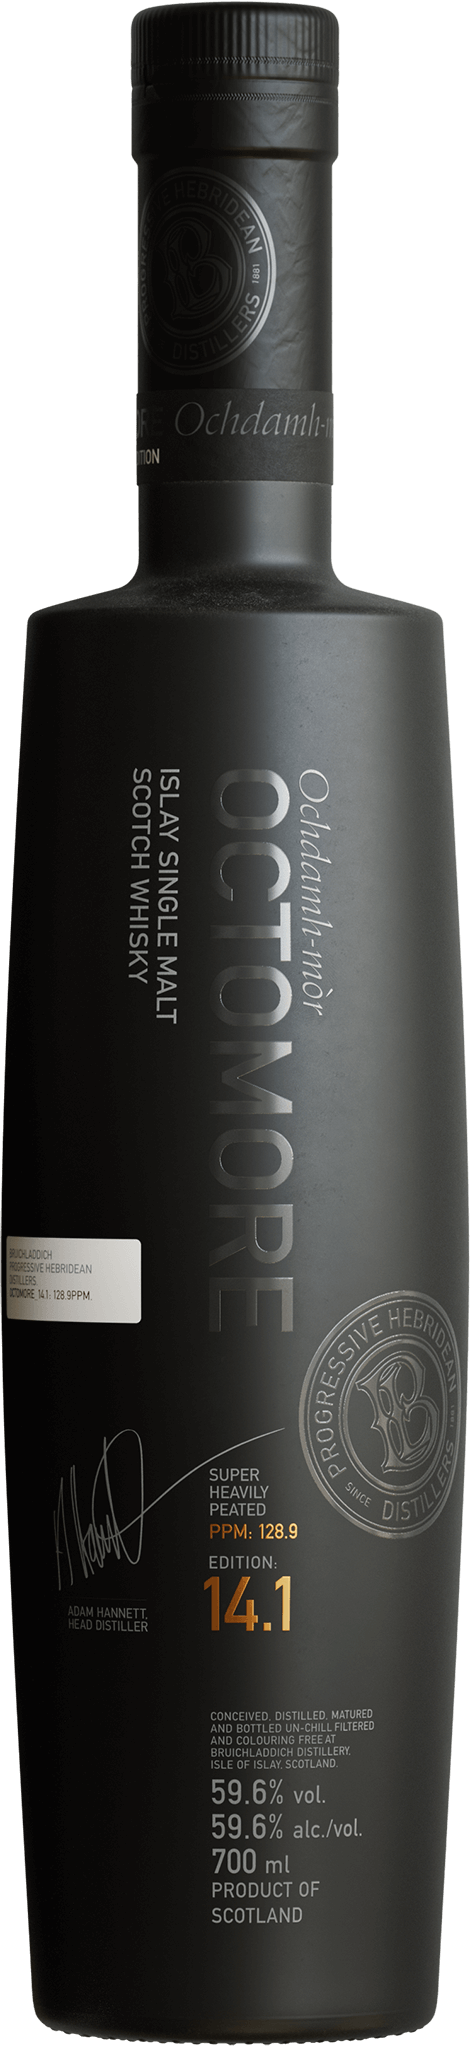 Octomore Edition 14.1 Islay Single Malt Scotch Whisky